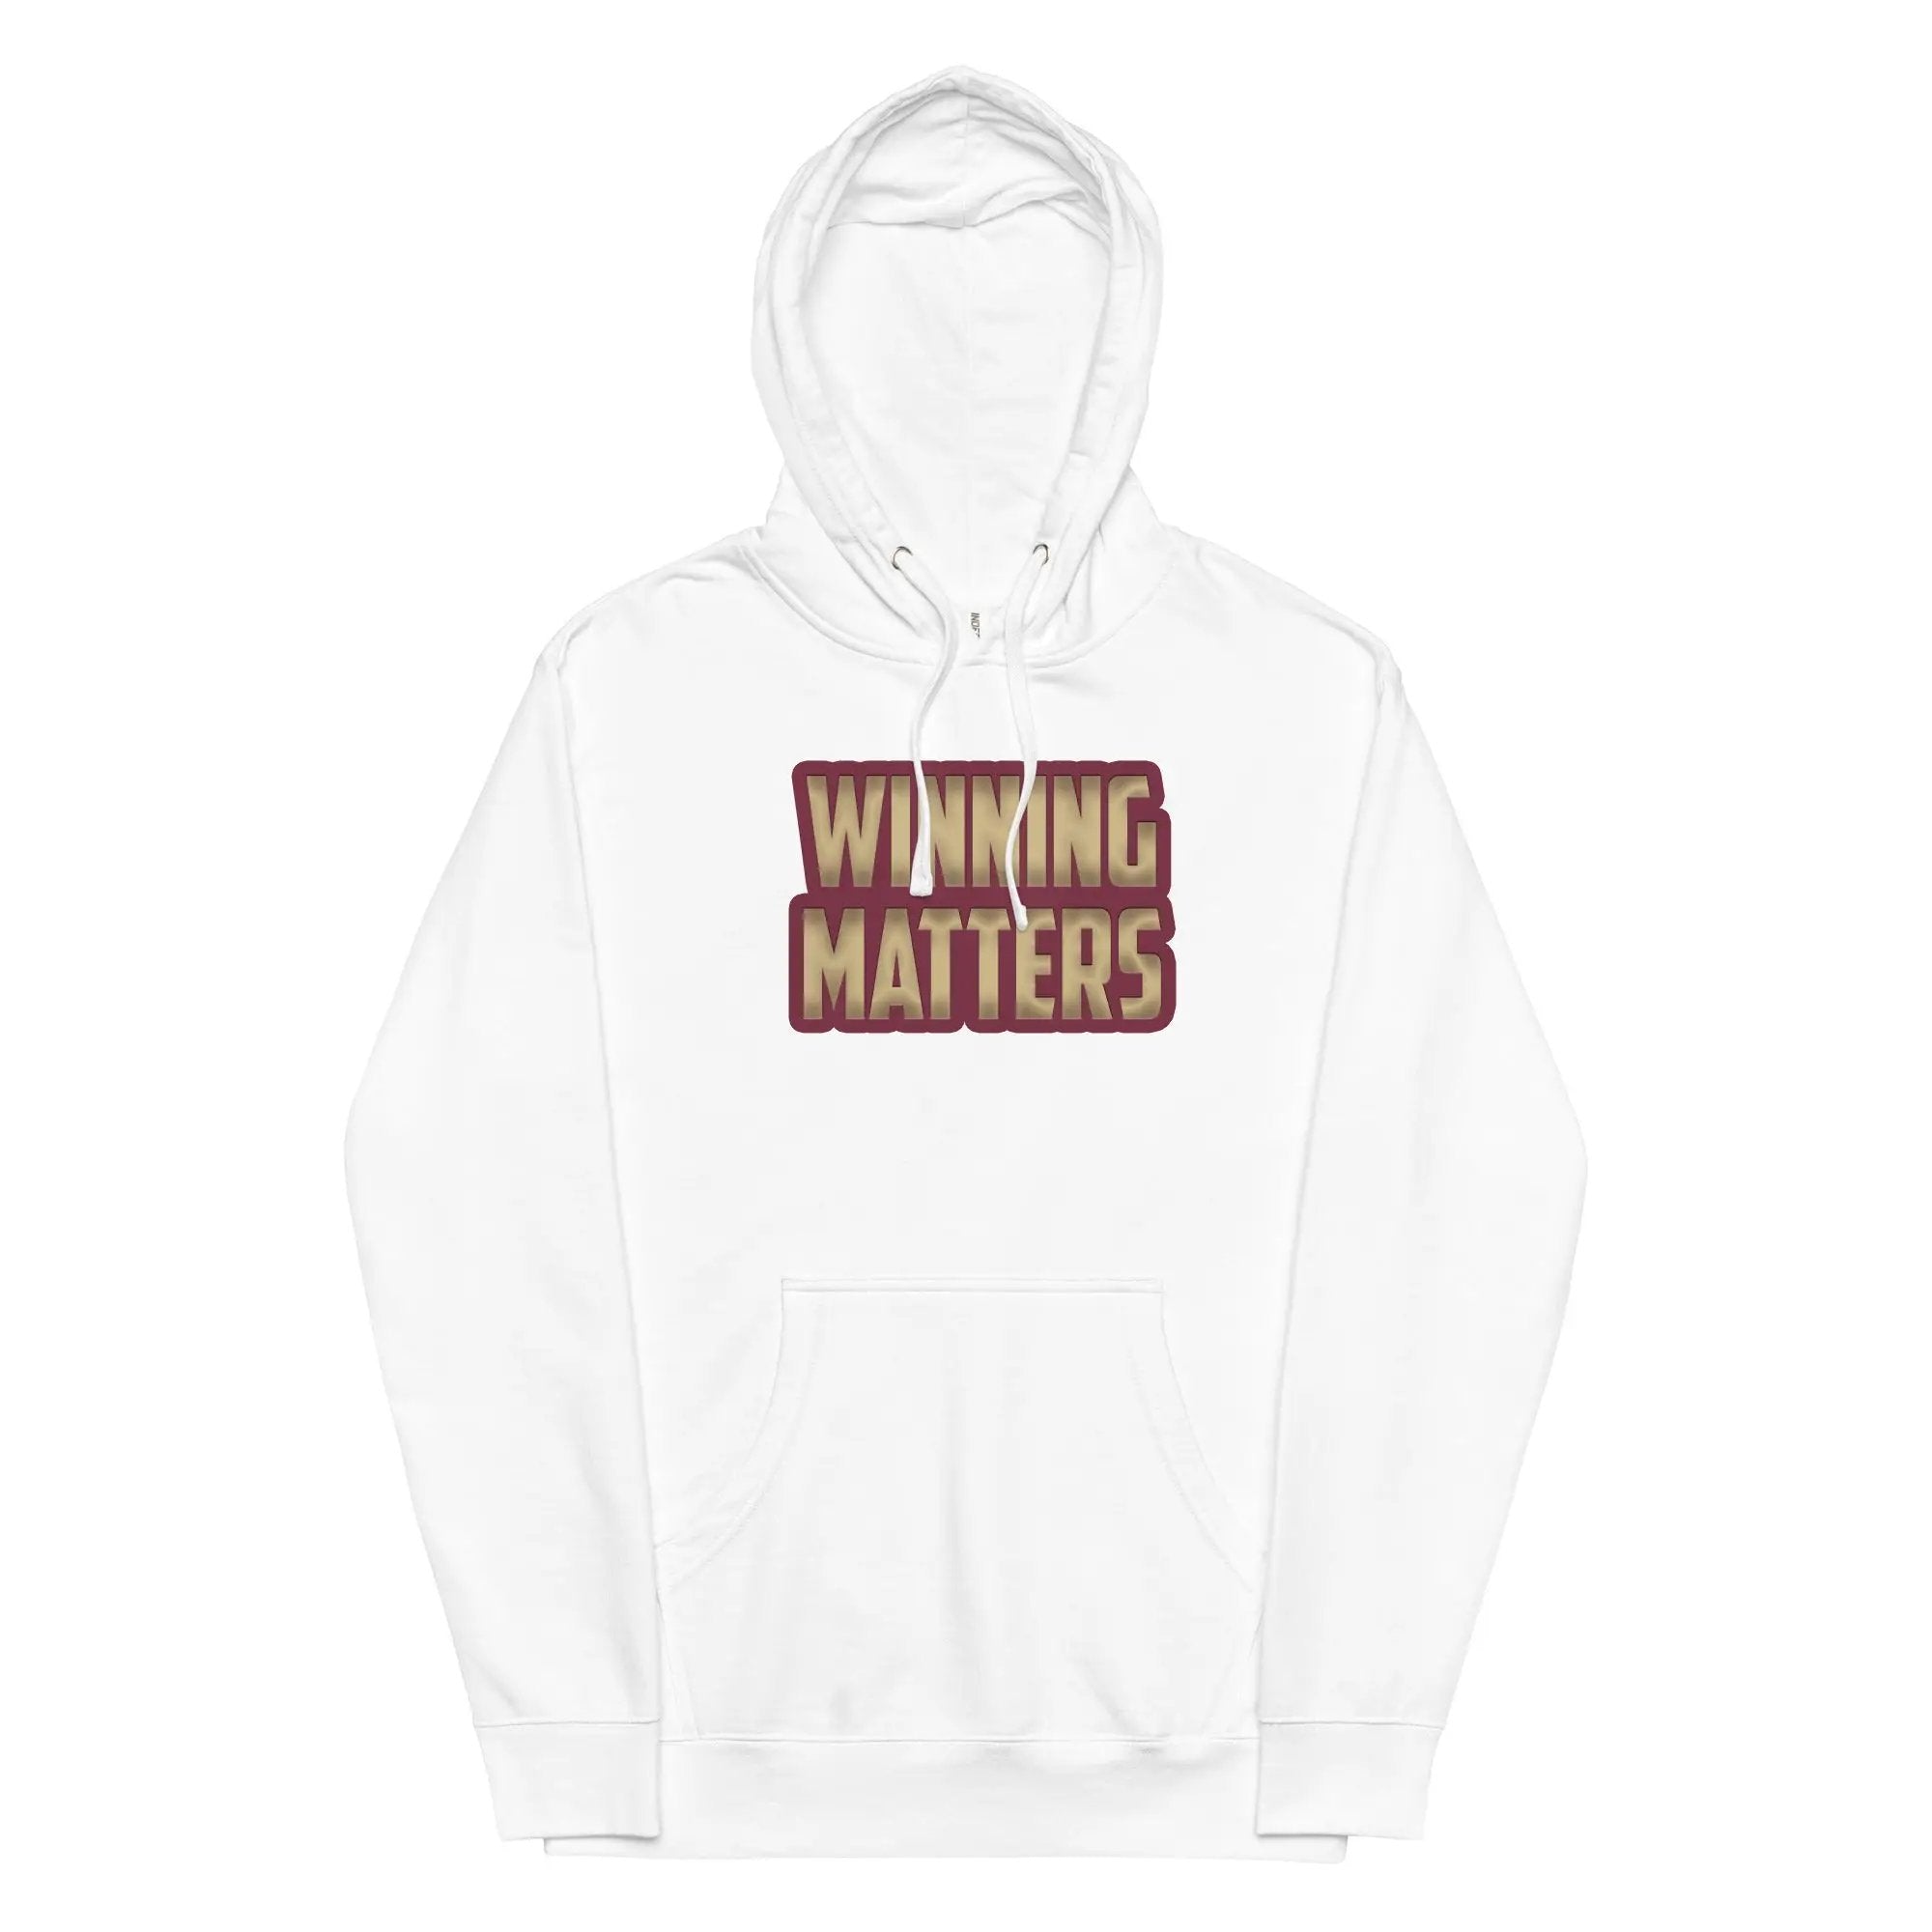 Winning Matters Unisex midweight hoodie